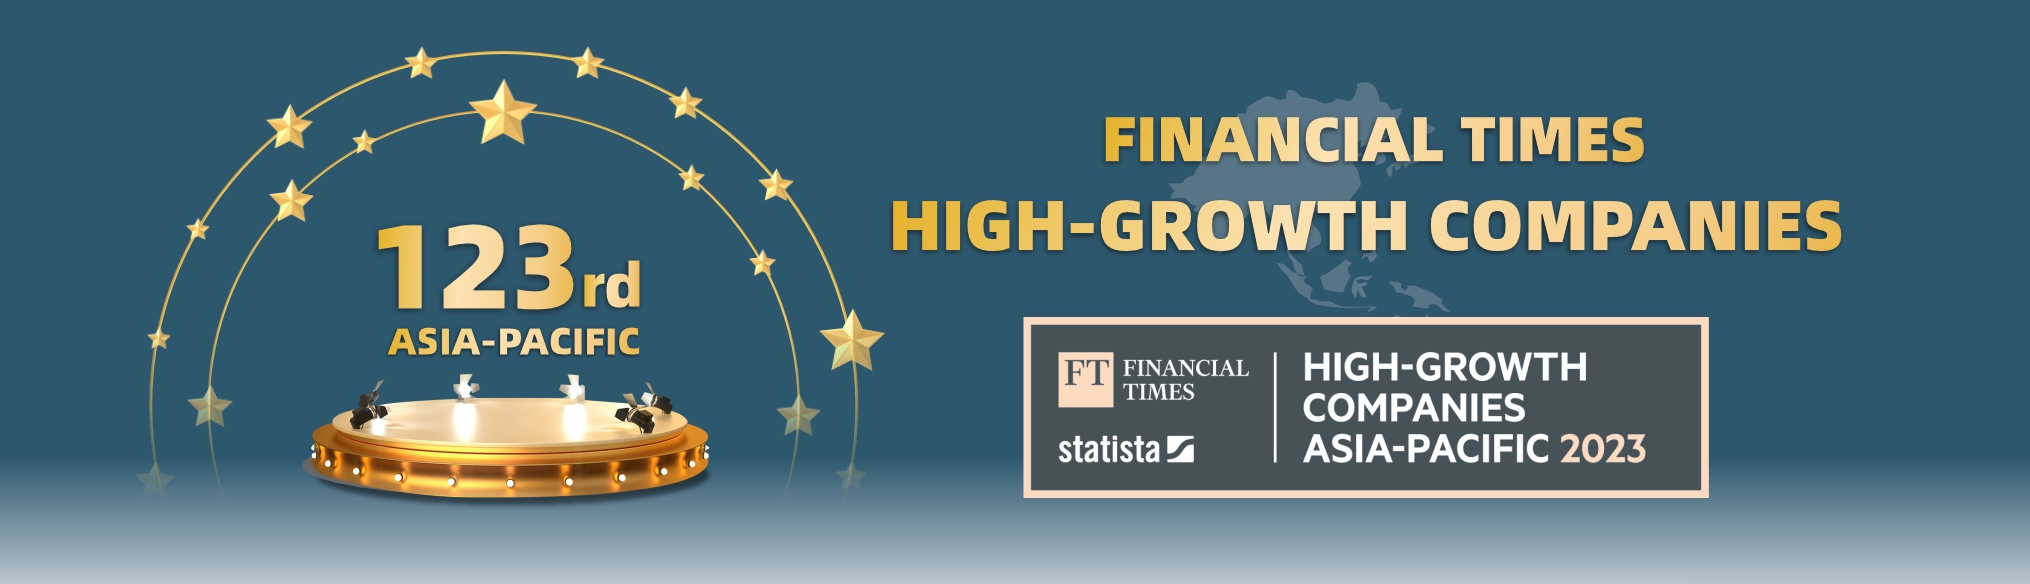 FT Financial Times High-Growth Company Occom